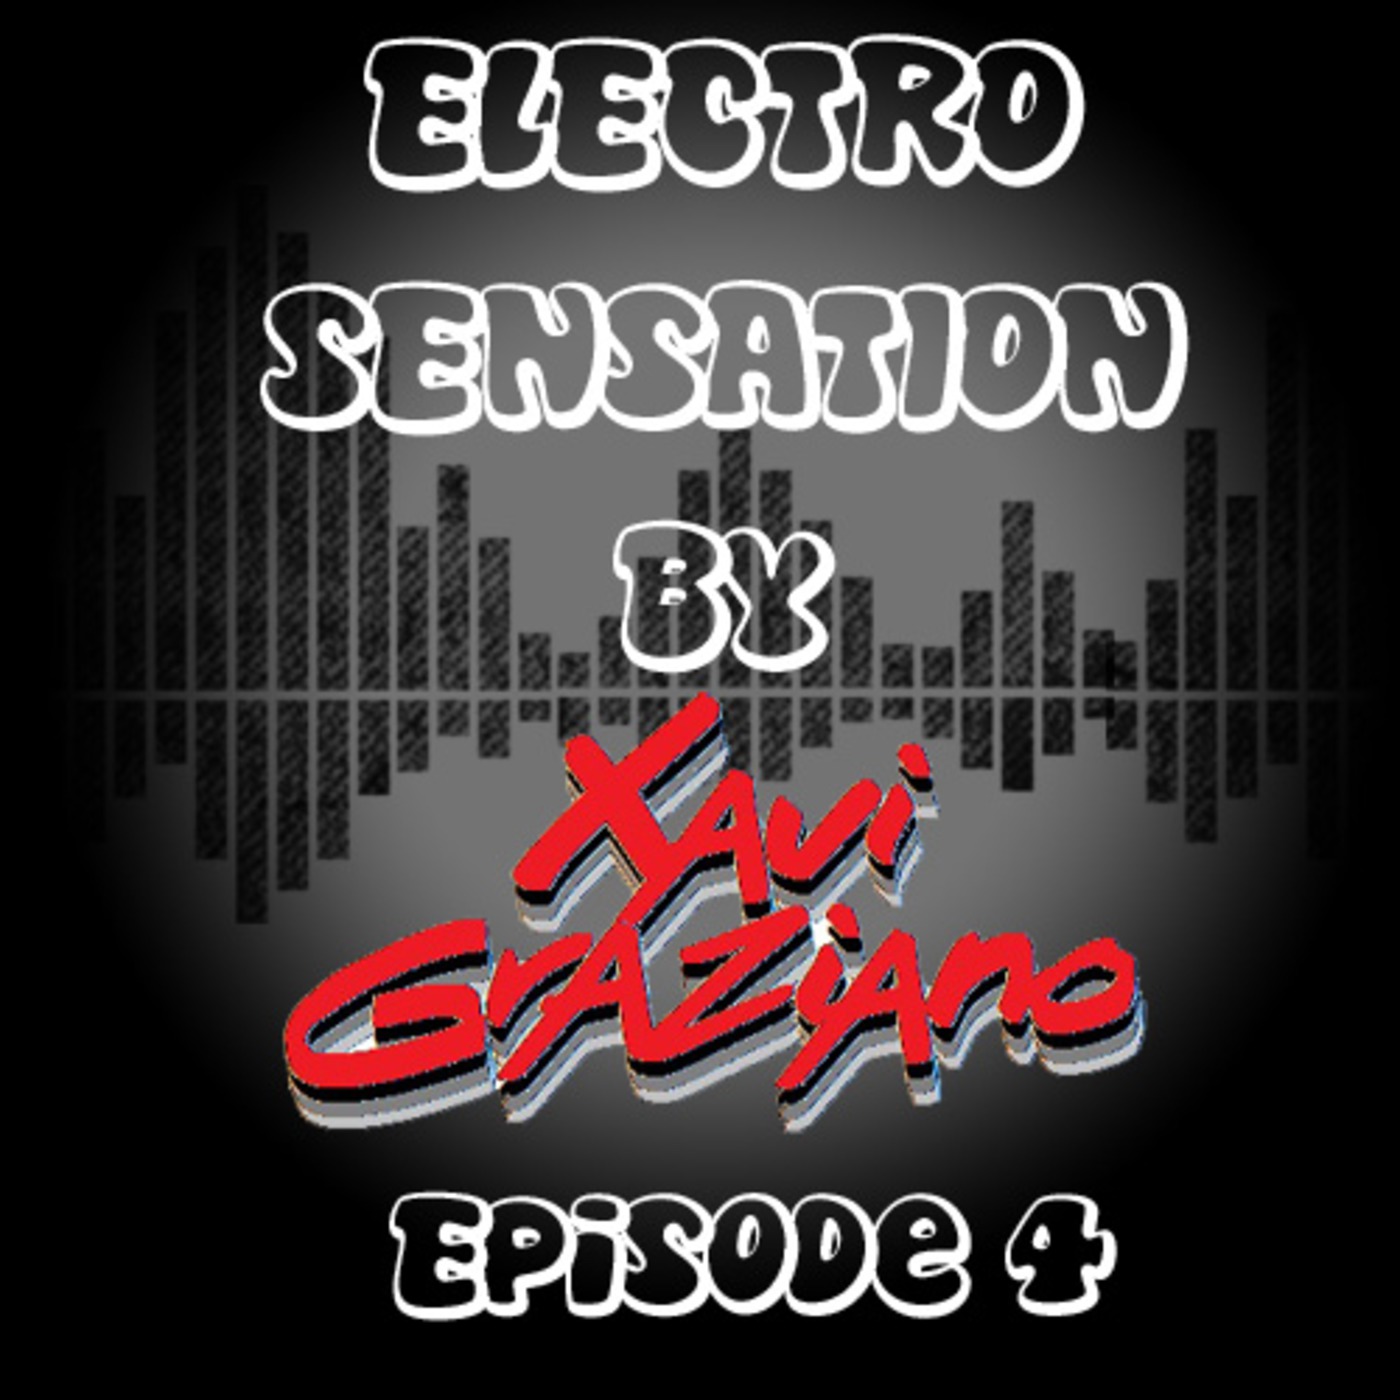 Electro Sensation by Xavi Graziano Episode 4